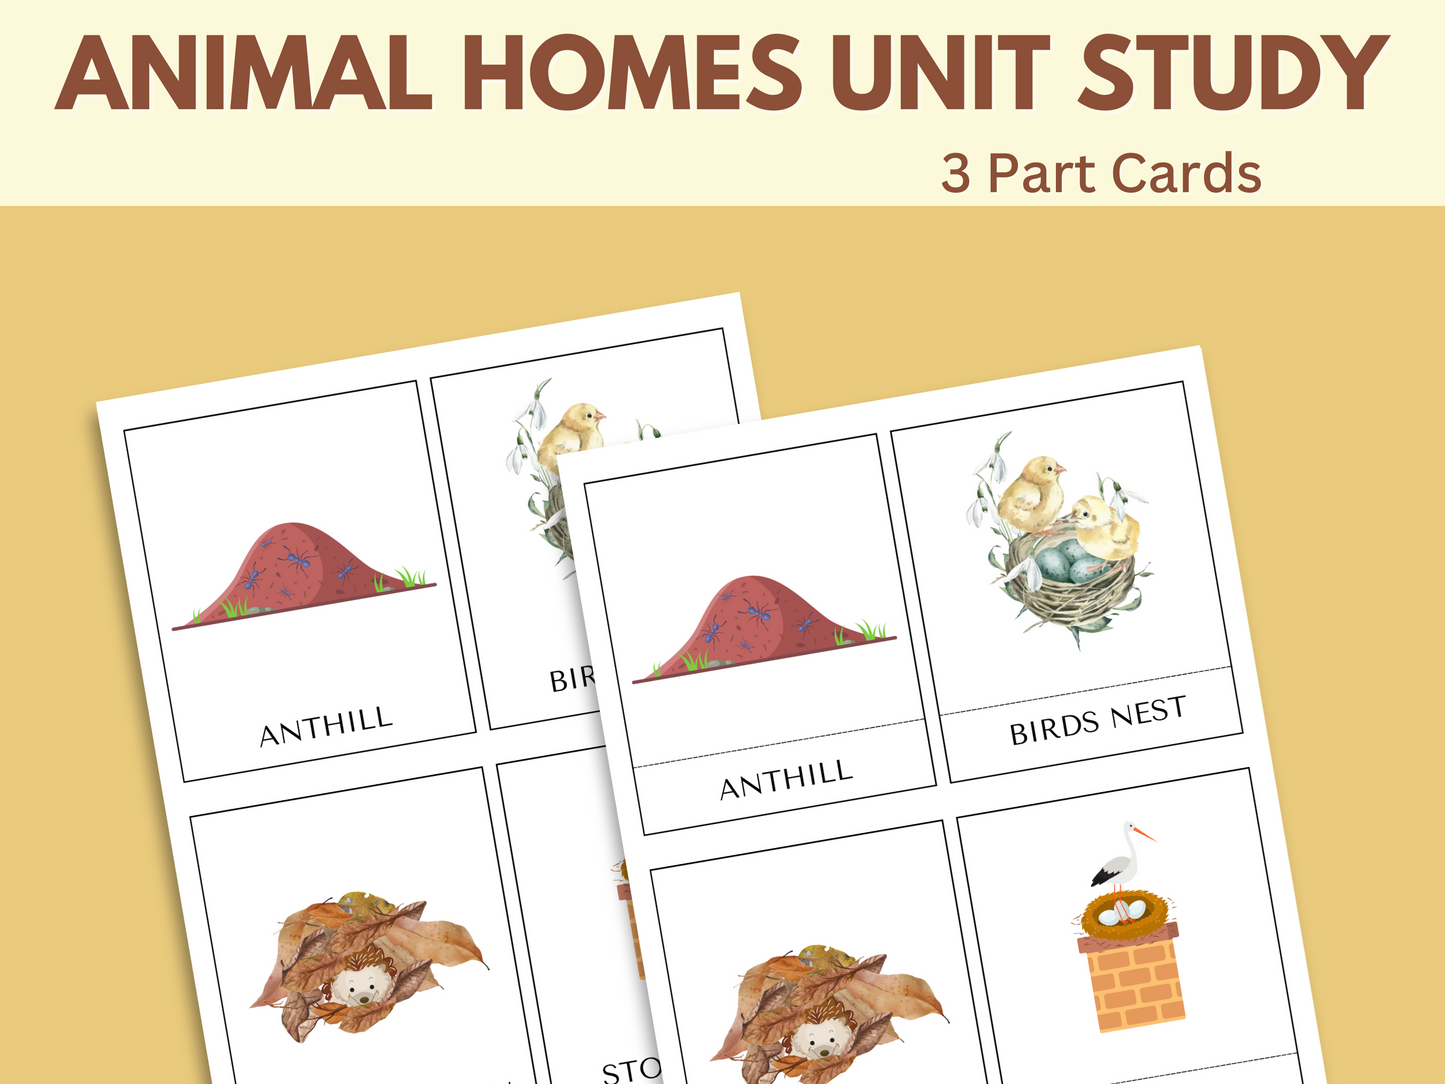 ANIMAL HOMES UNIT STUDY